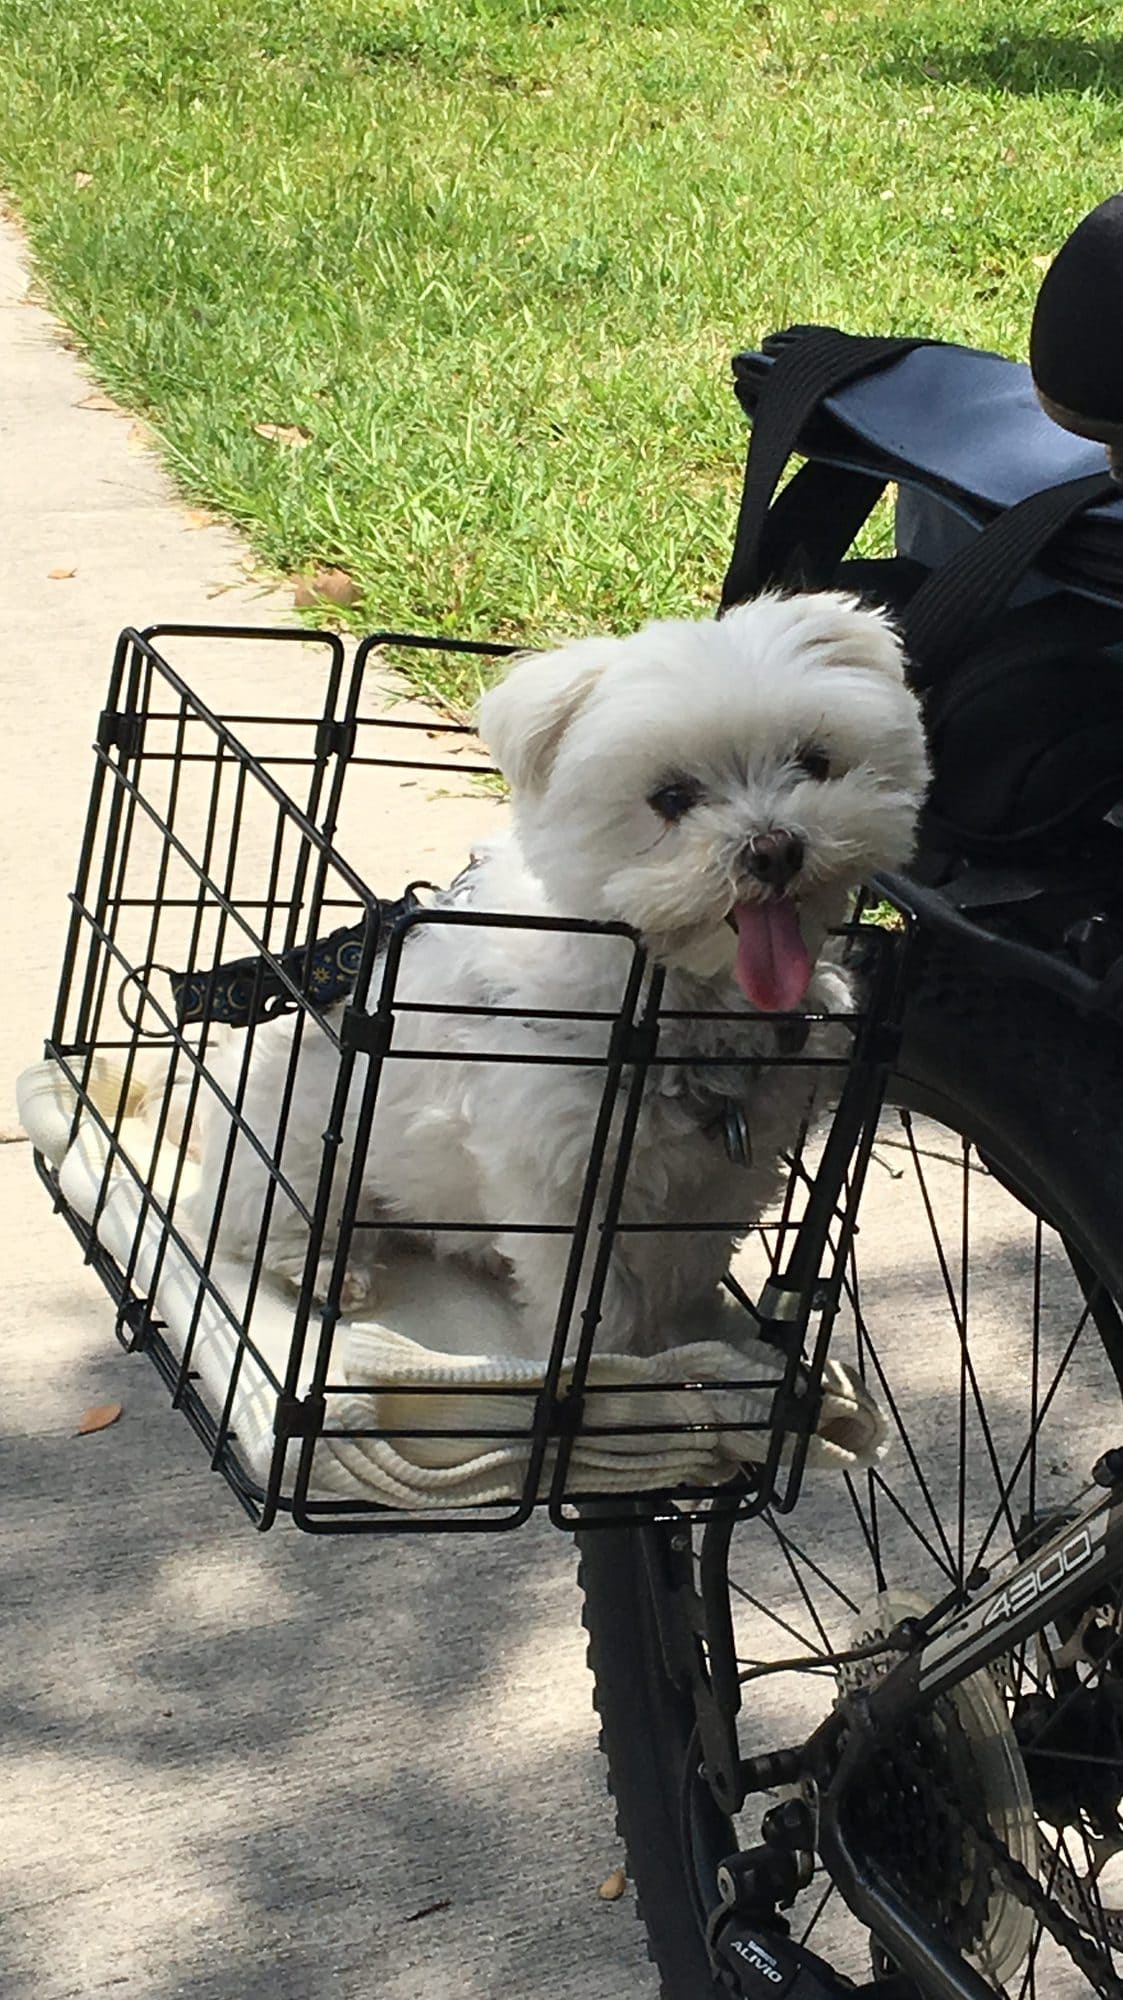 Small whit dog in bike basket